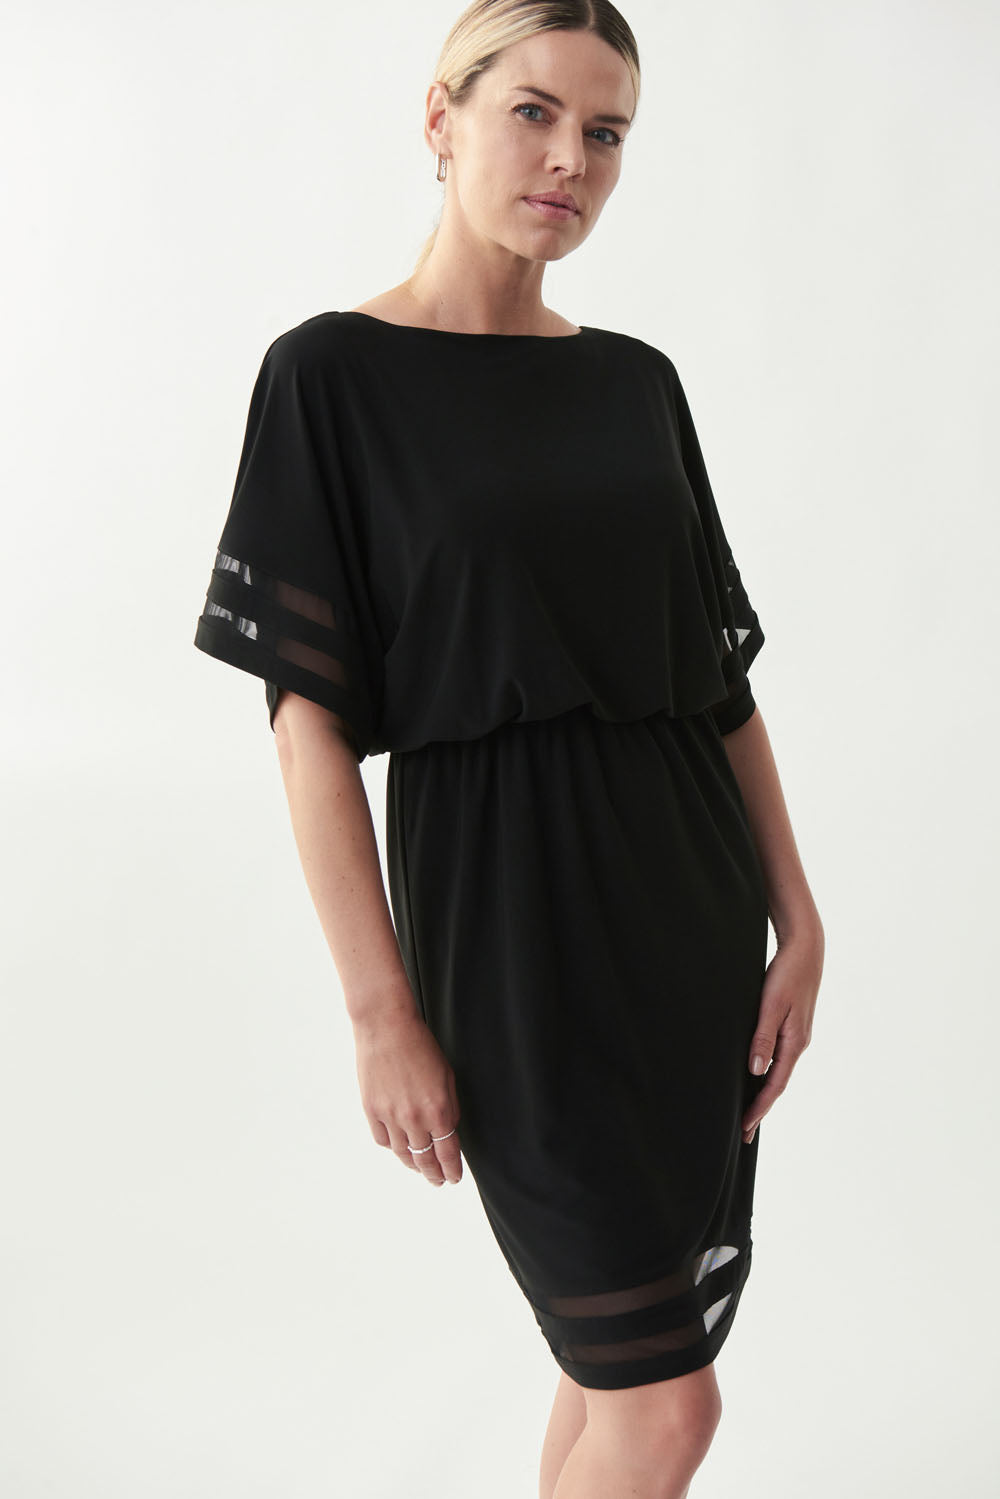 Joseph Ribkoff Black Sheer Sleeved Dress Style 221183